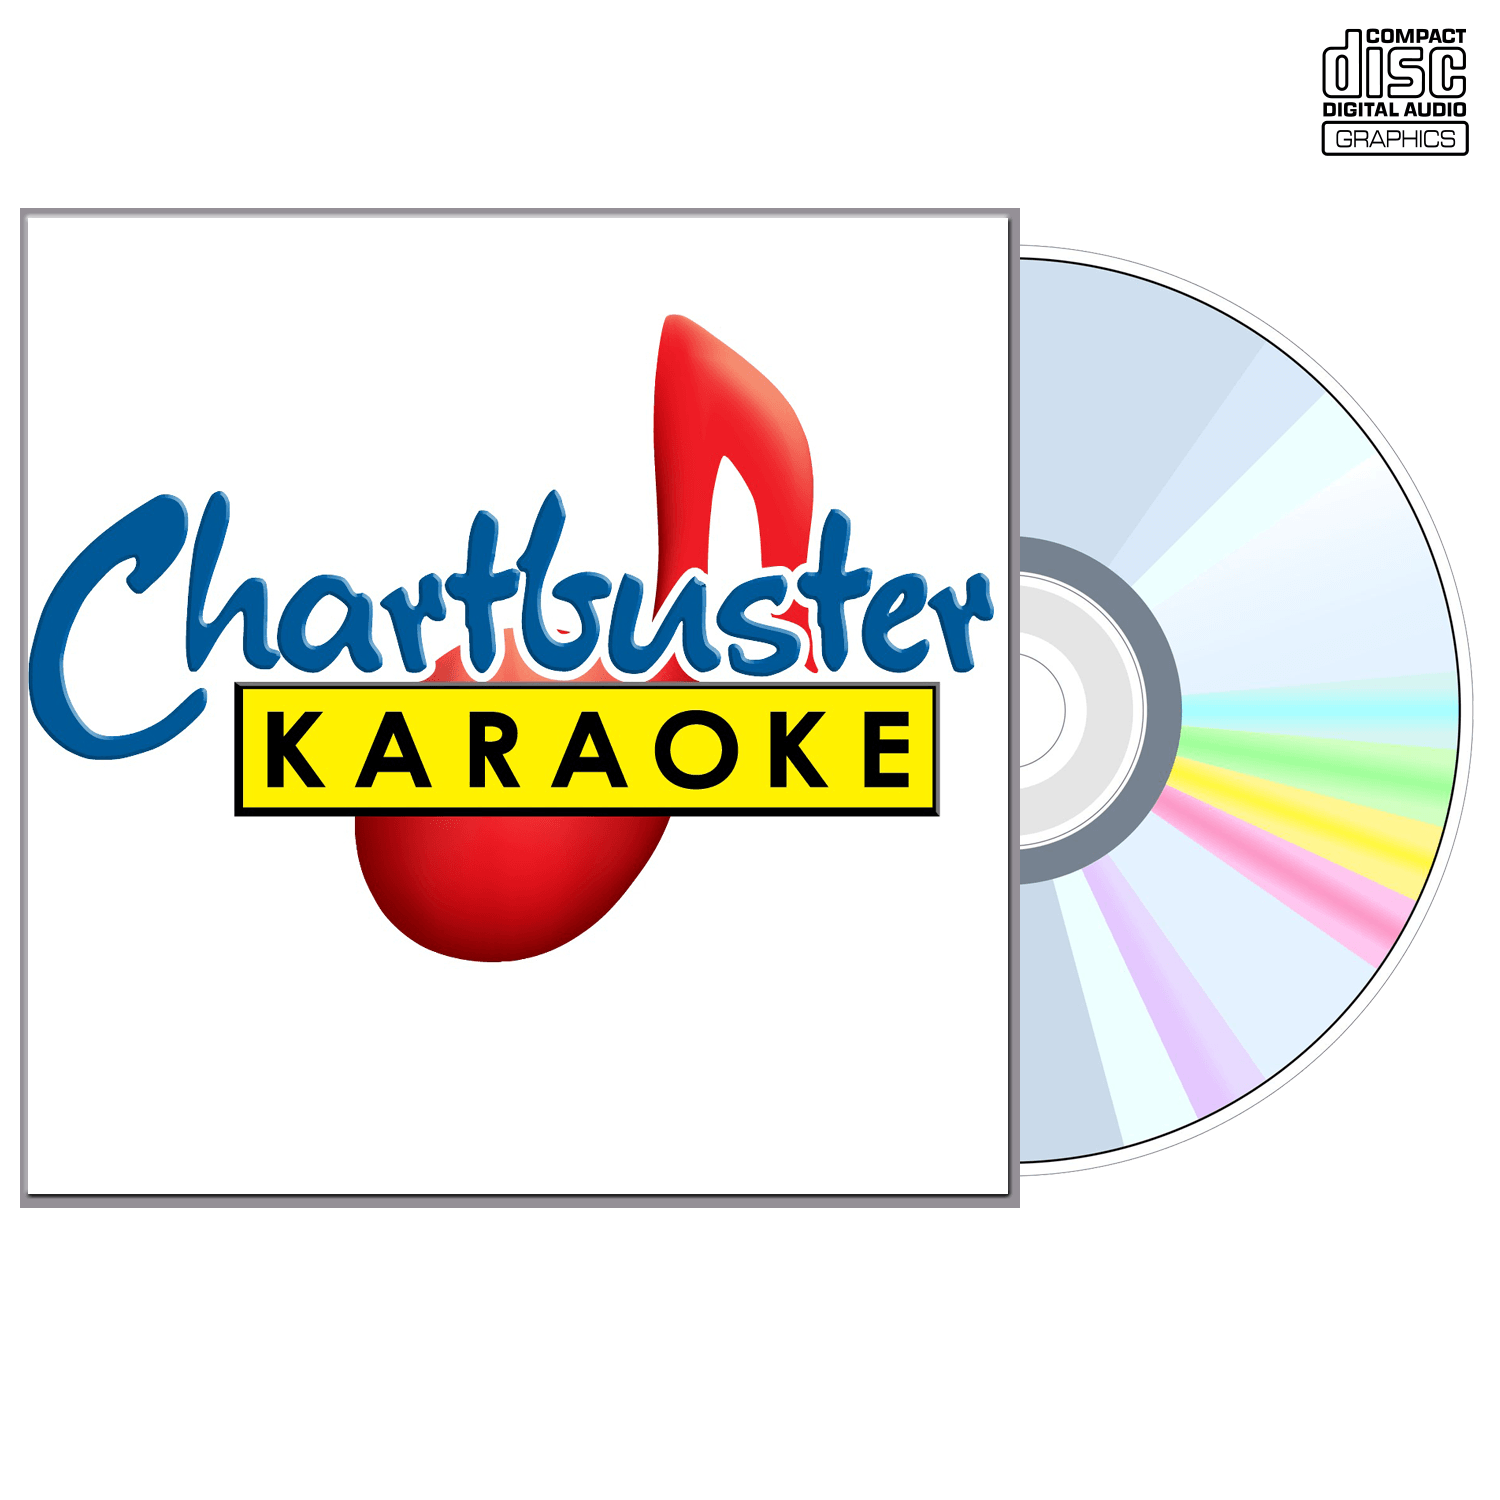 Jesse Mccartney - CD+G - Chartbuster Karaoke - Karaoke Home Entertainment